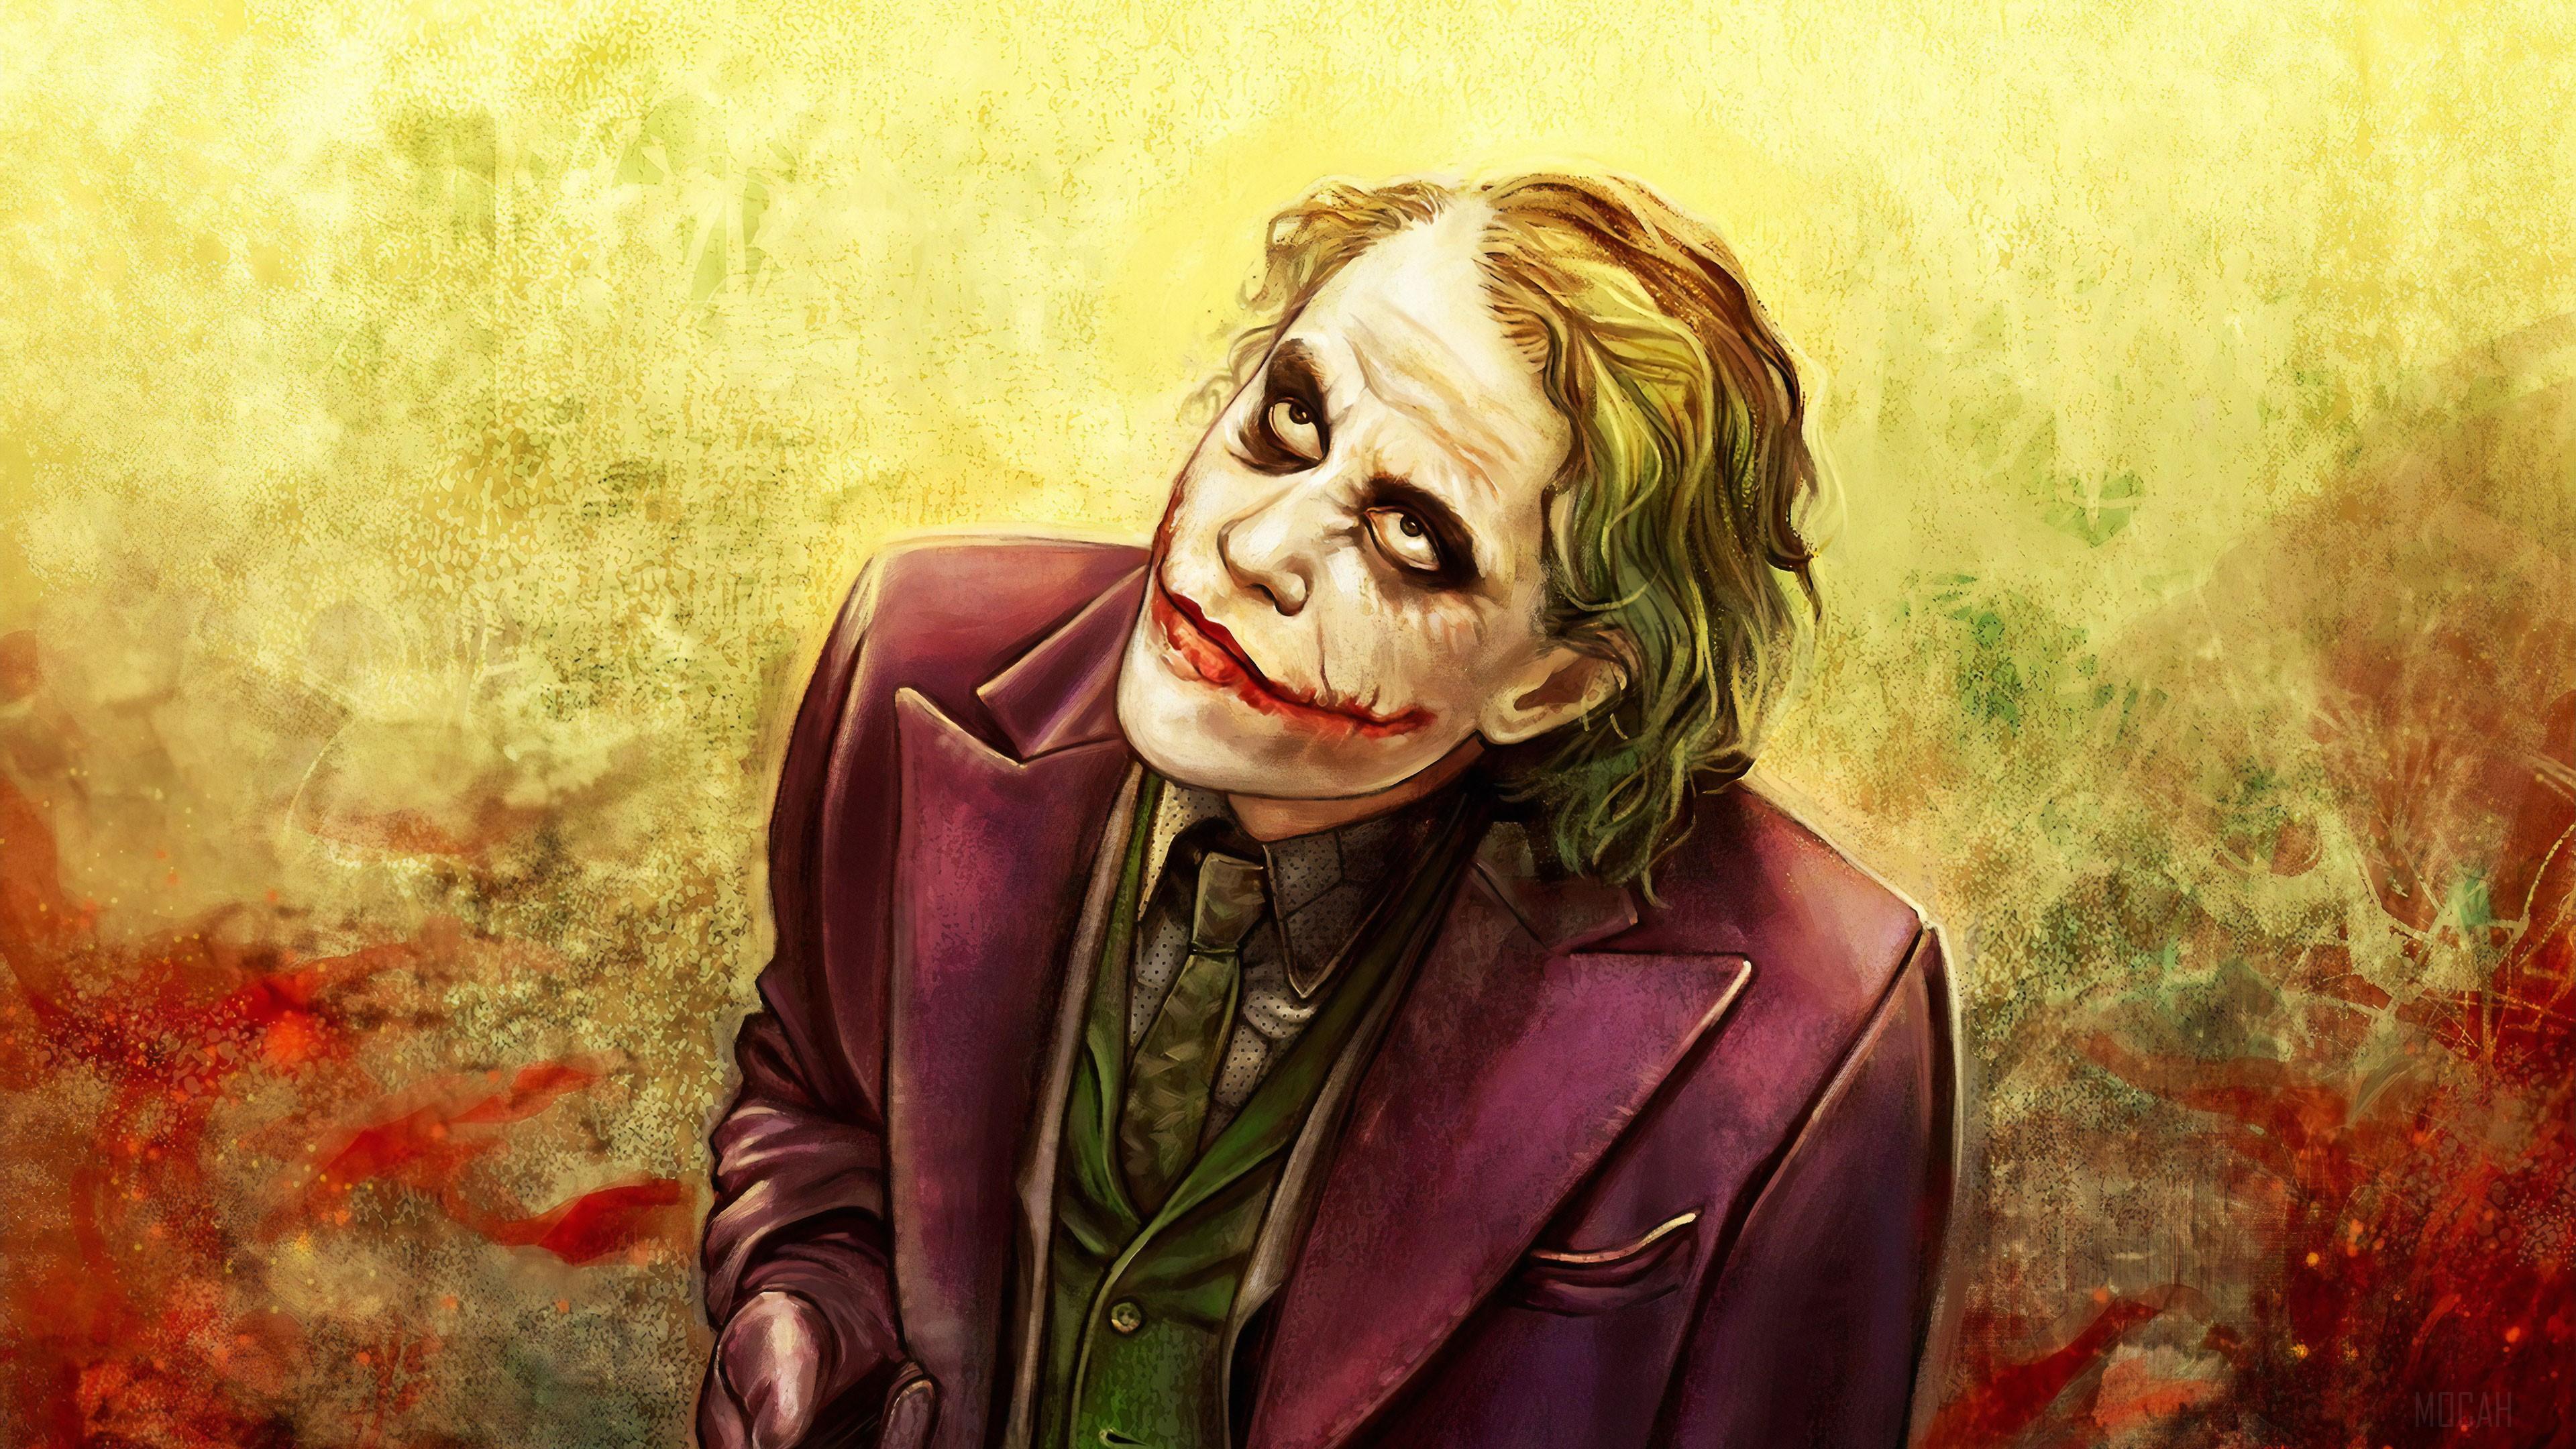 HD wallpaper, Joker Heath Ledger Art 2019 4K